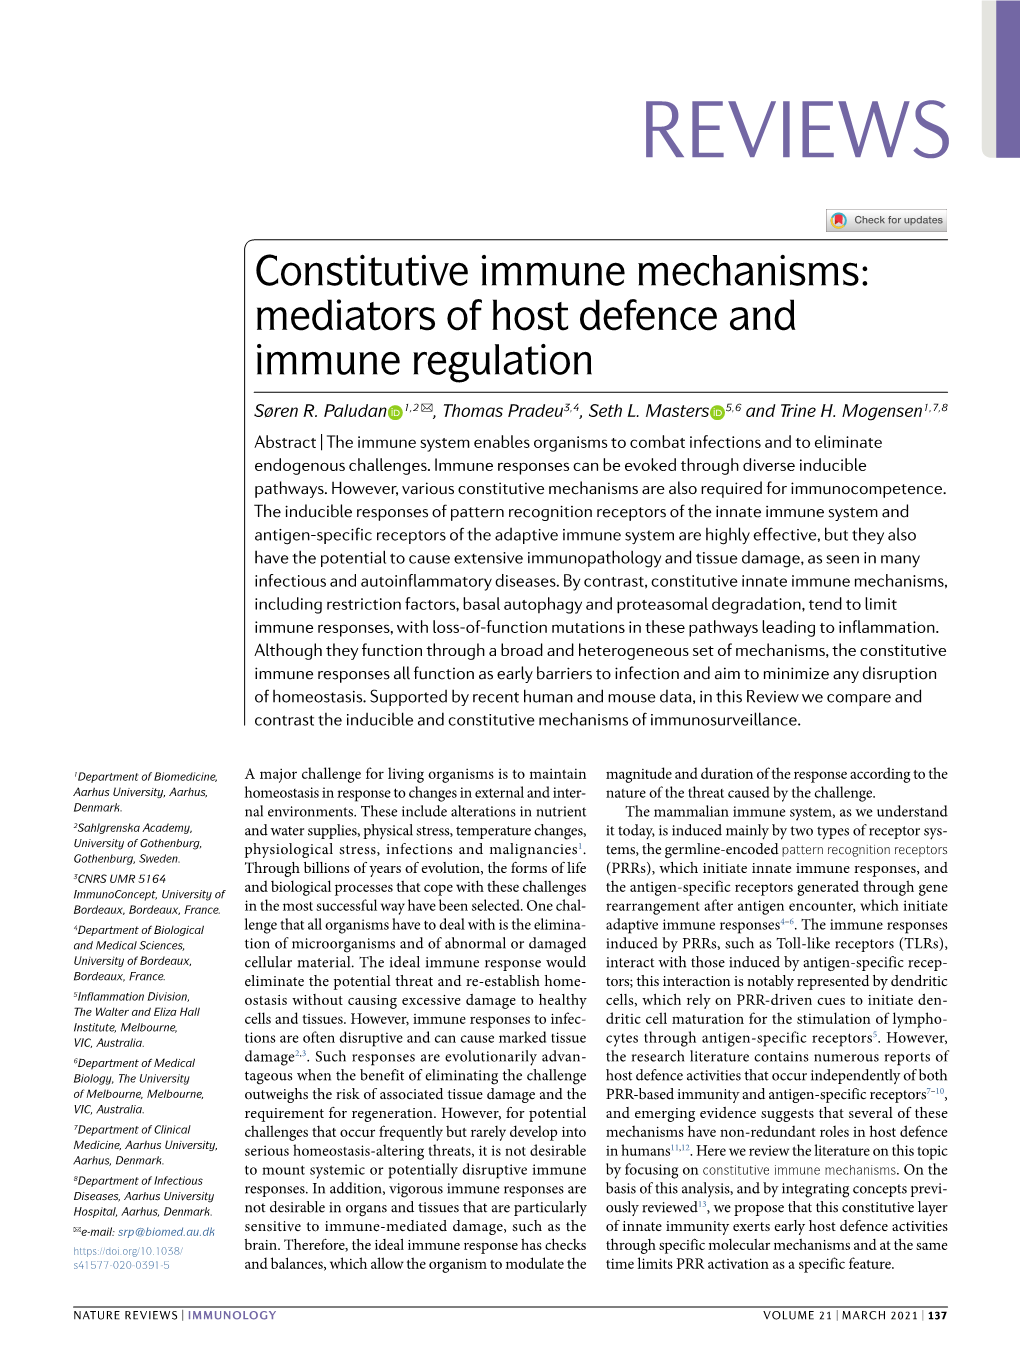 Constitutive Immune Mechanisms: Mediators of Host Defence and Immune Regulation